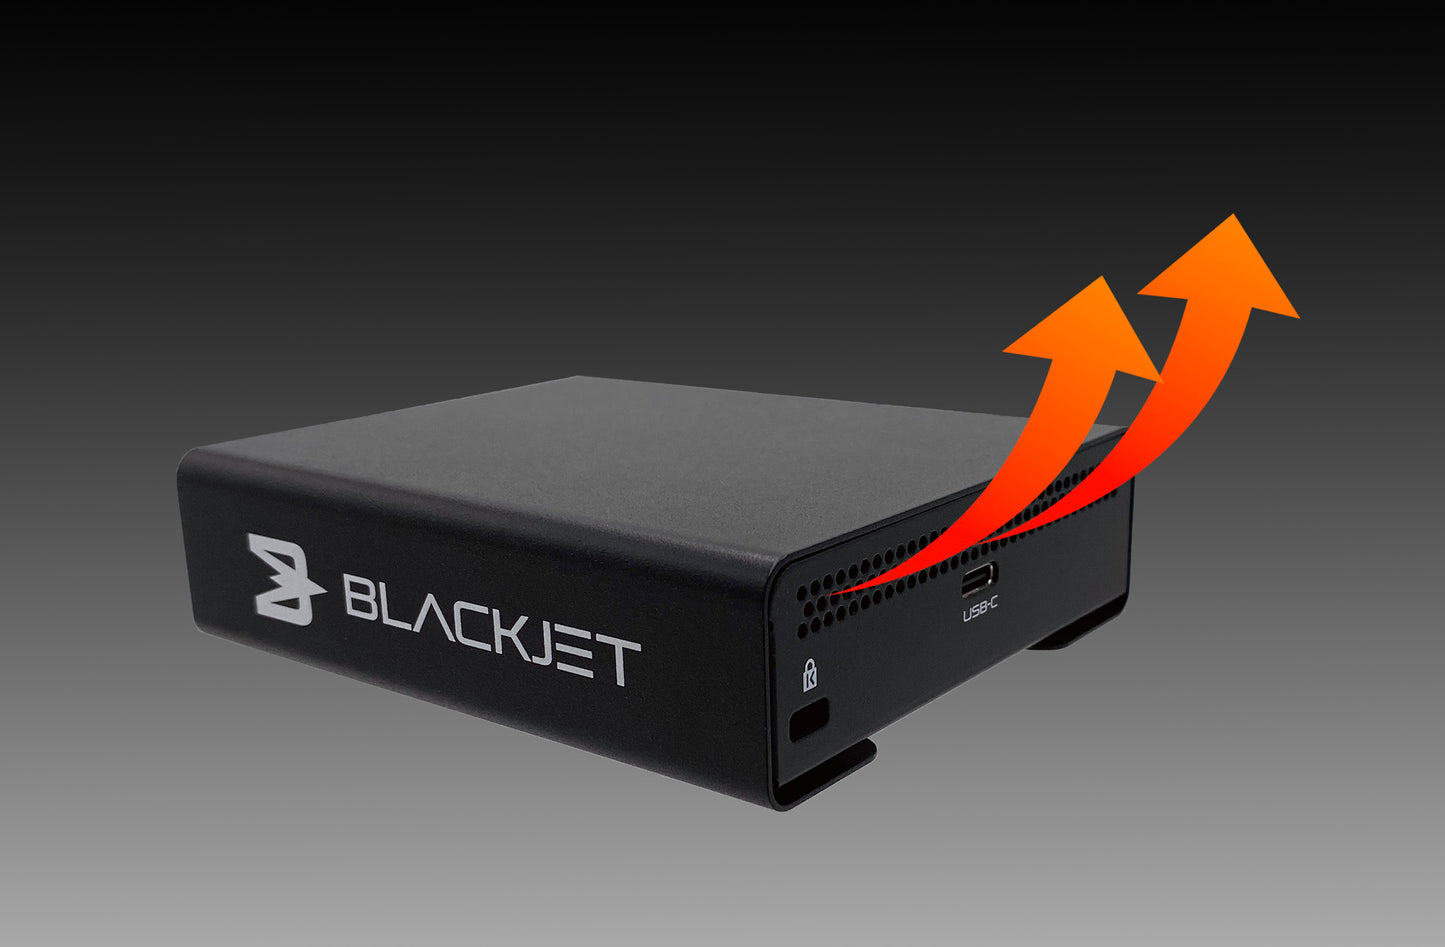 Lector BLACKJET VX-1R RED MINI-MAG USB 3.2 Gen 2 